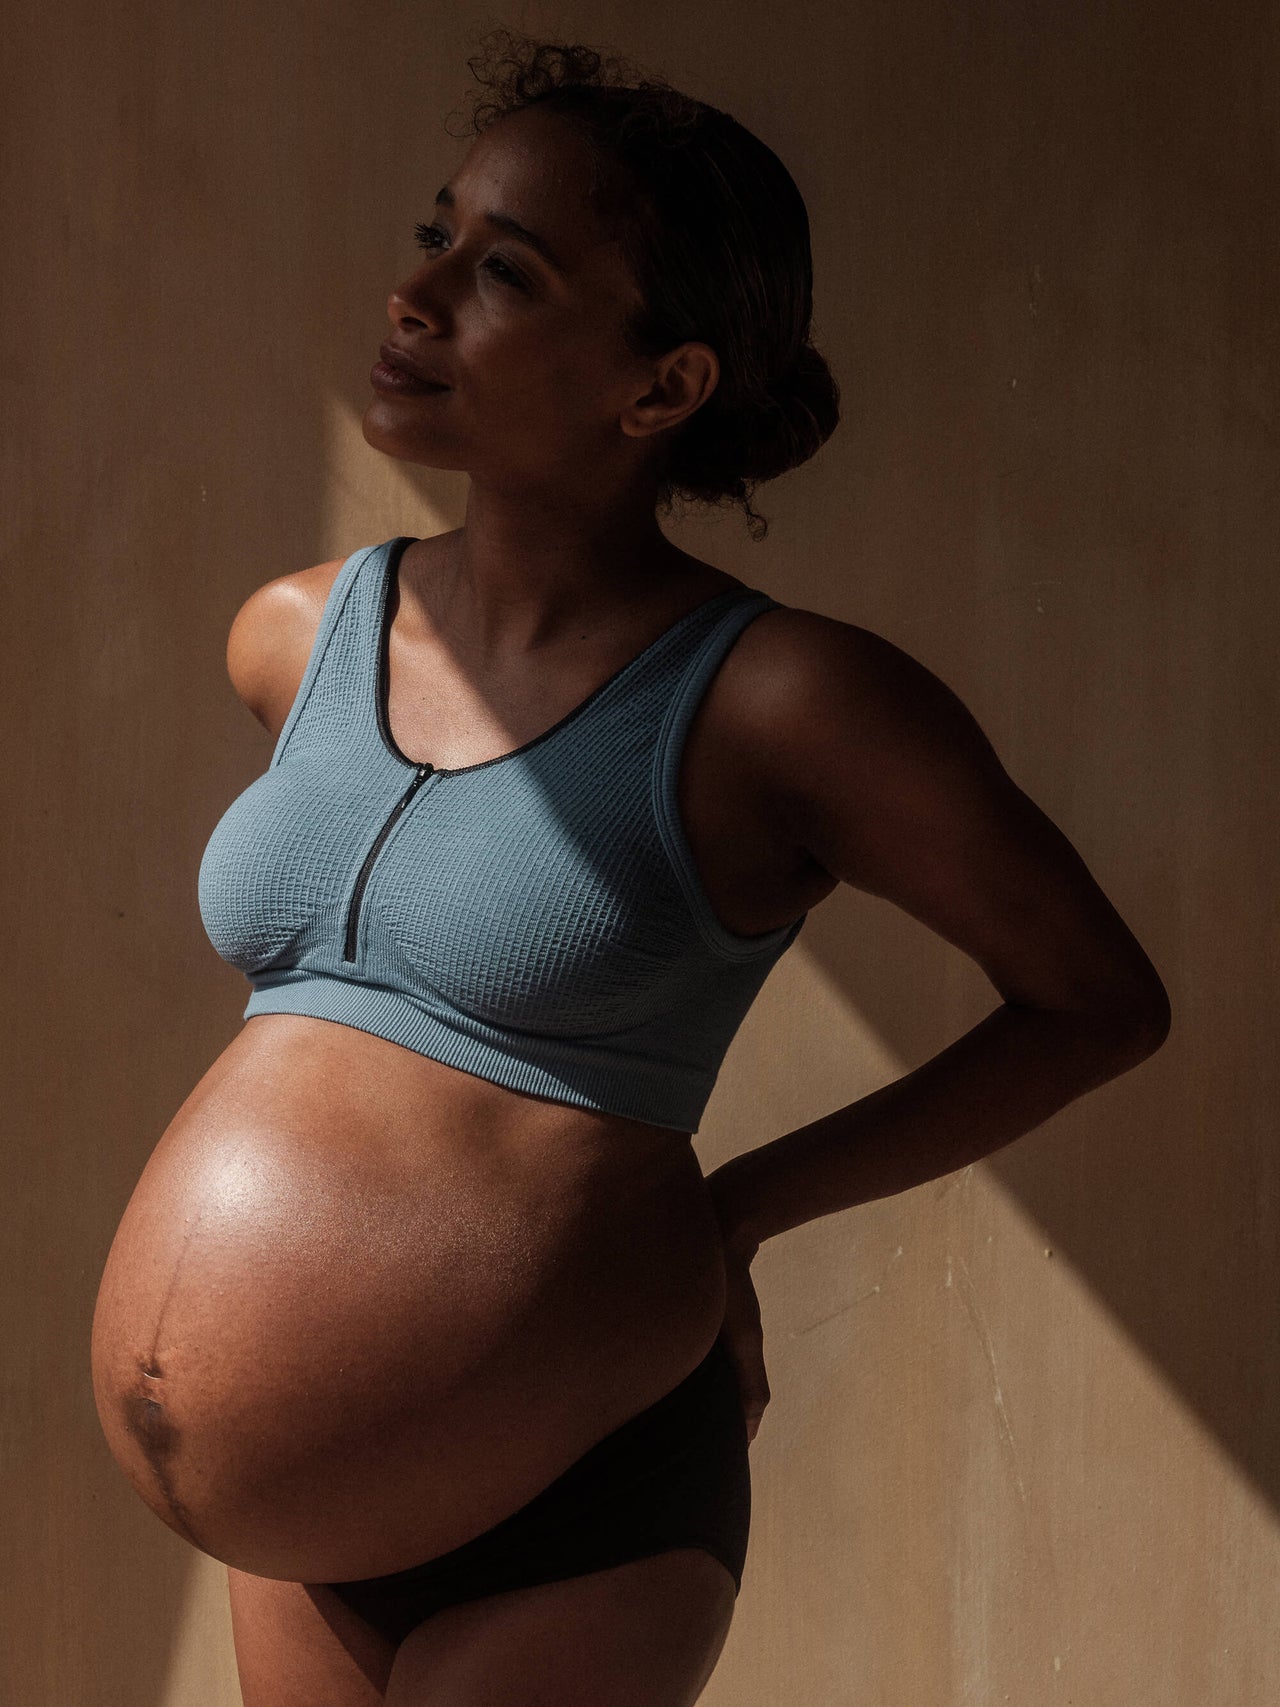 Pregnant woman in sports bra using smart phone in doorway - Stock